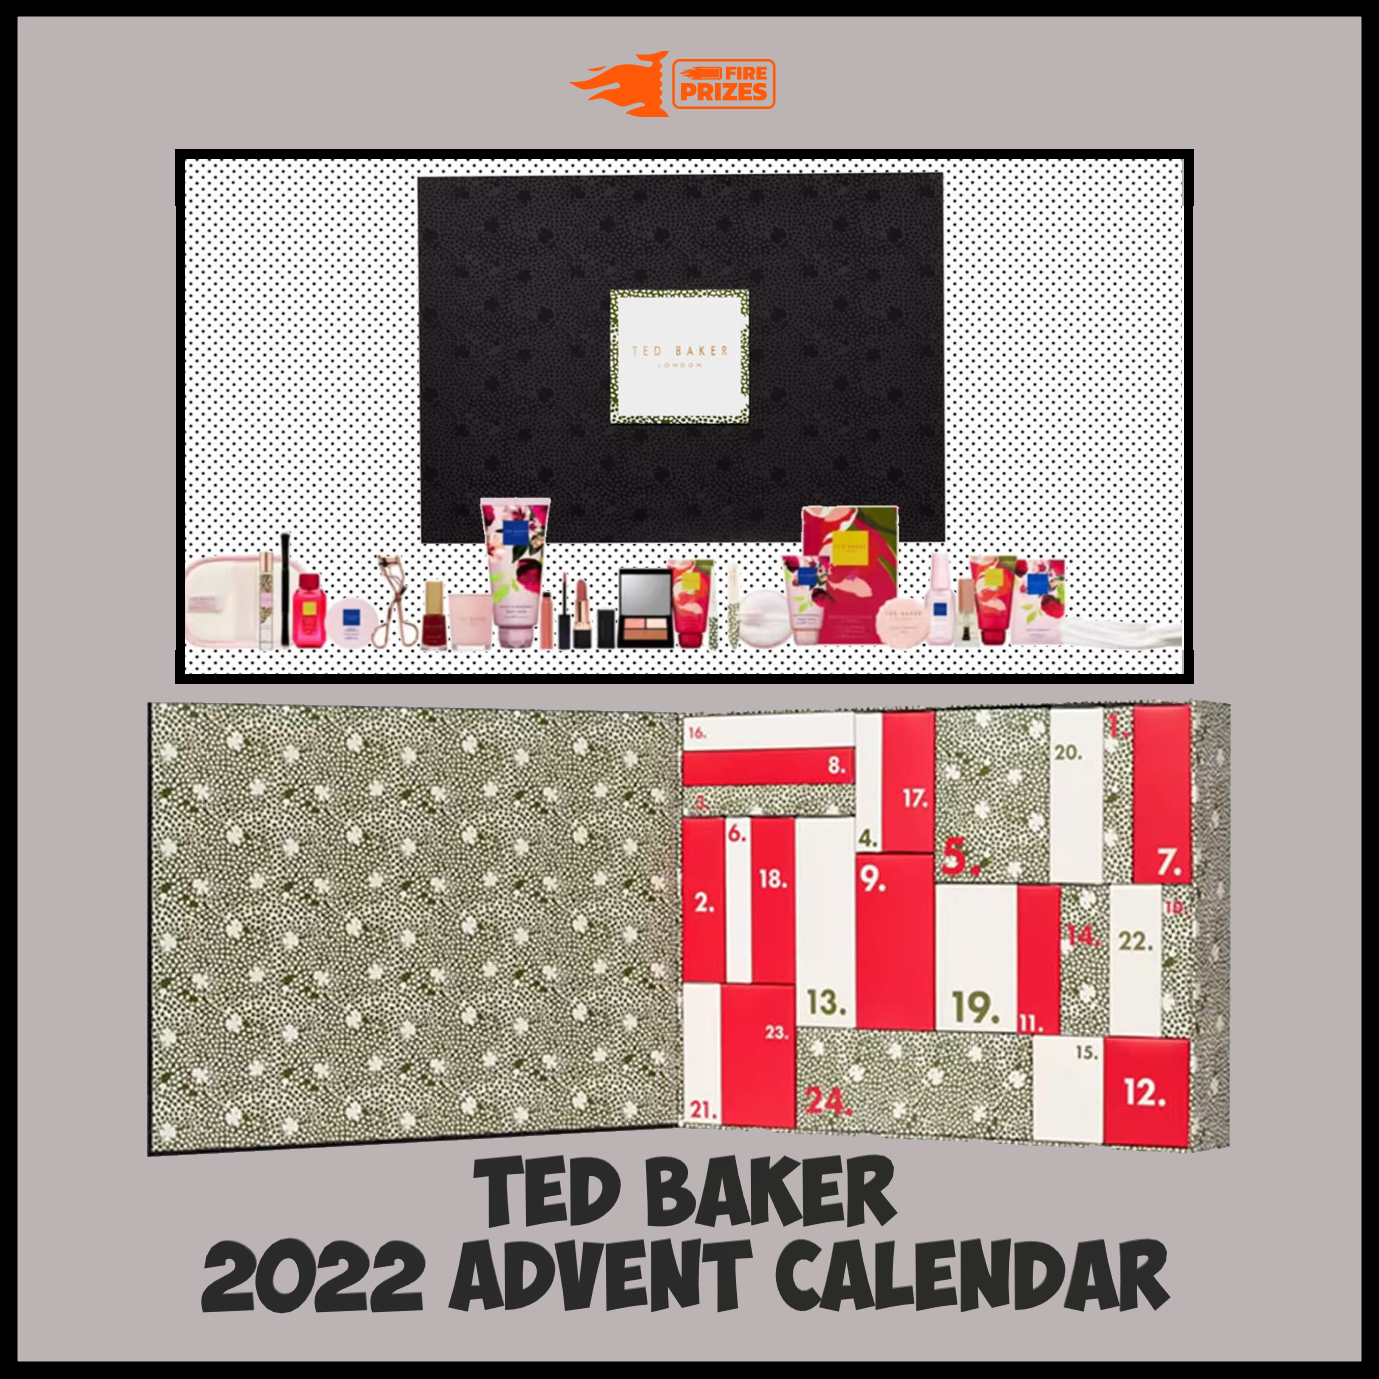 Ted Baker 2022 Advent Calendar FIRE PRIZES